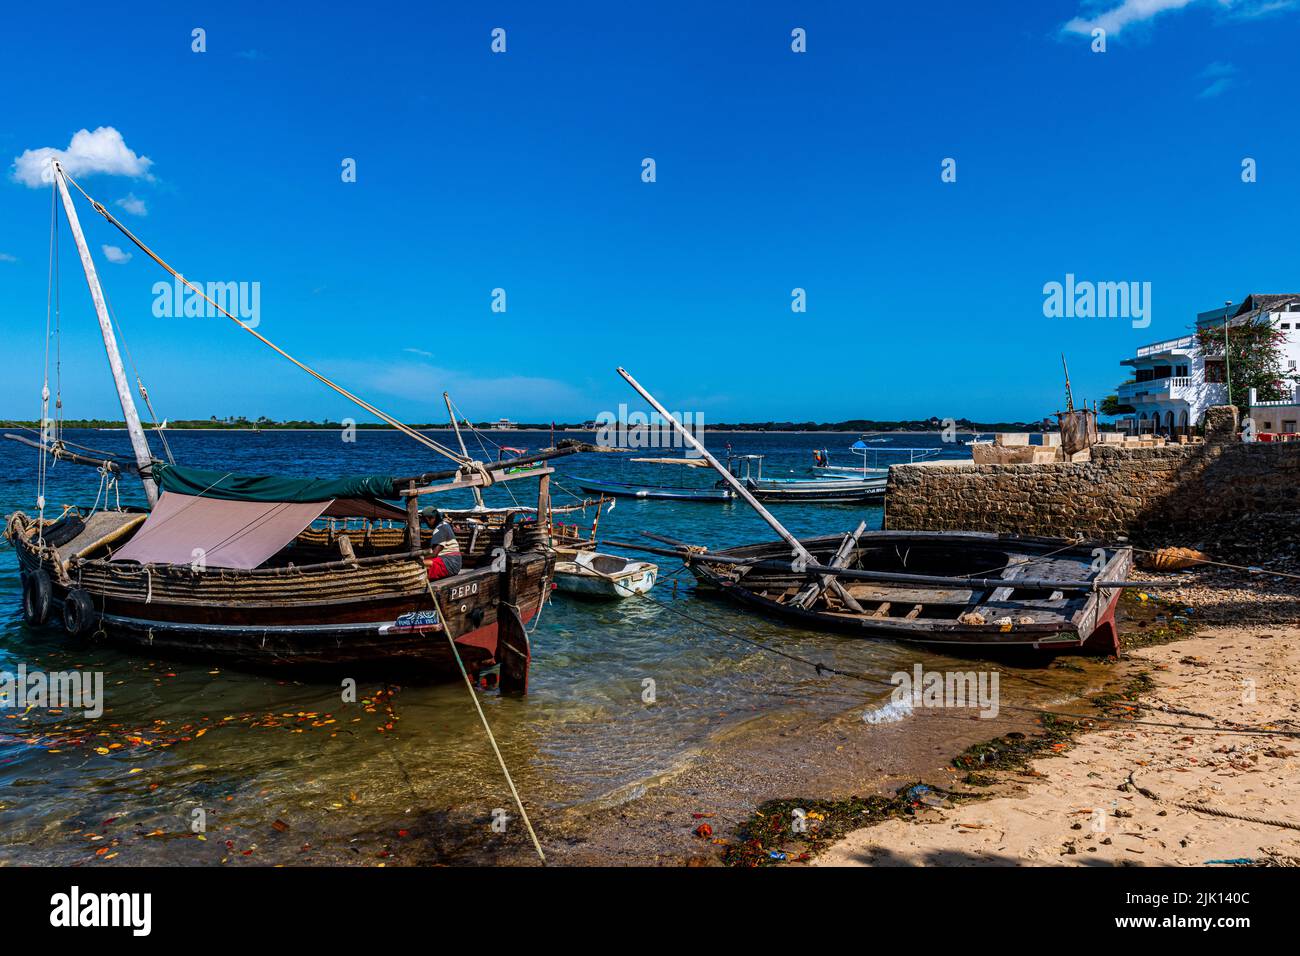 Dhow tradizionale, isola di Lamu, Kenya Foto Stock